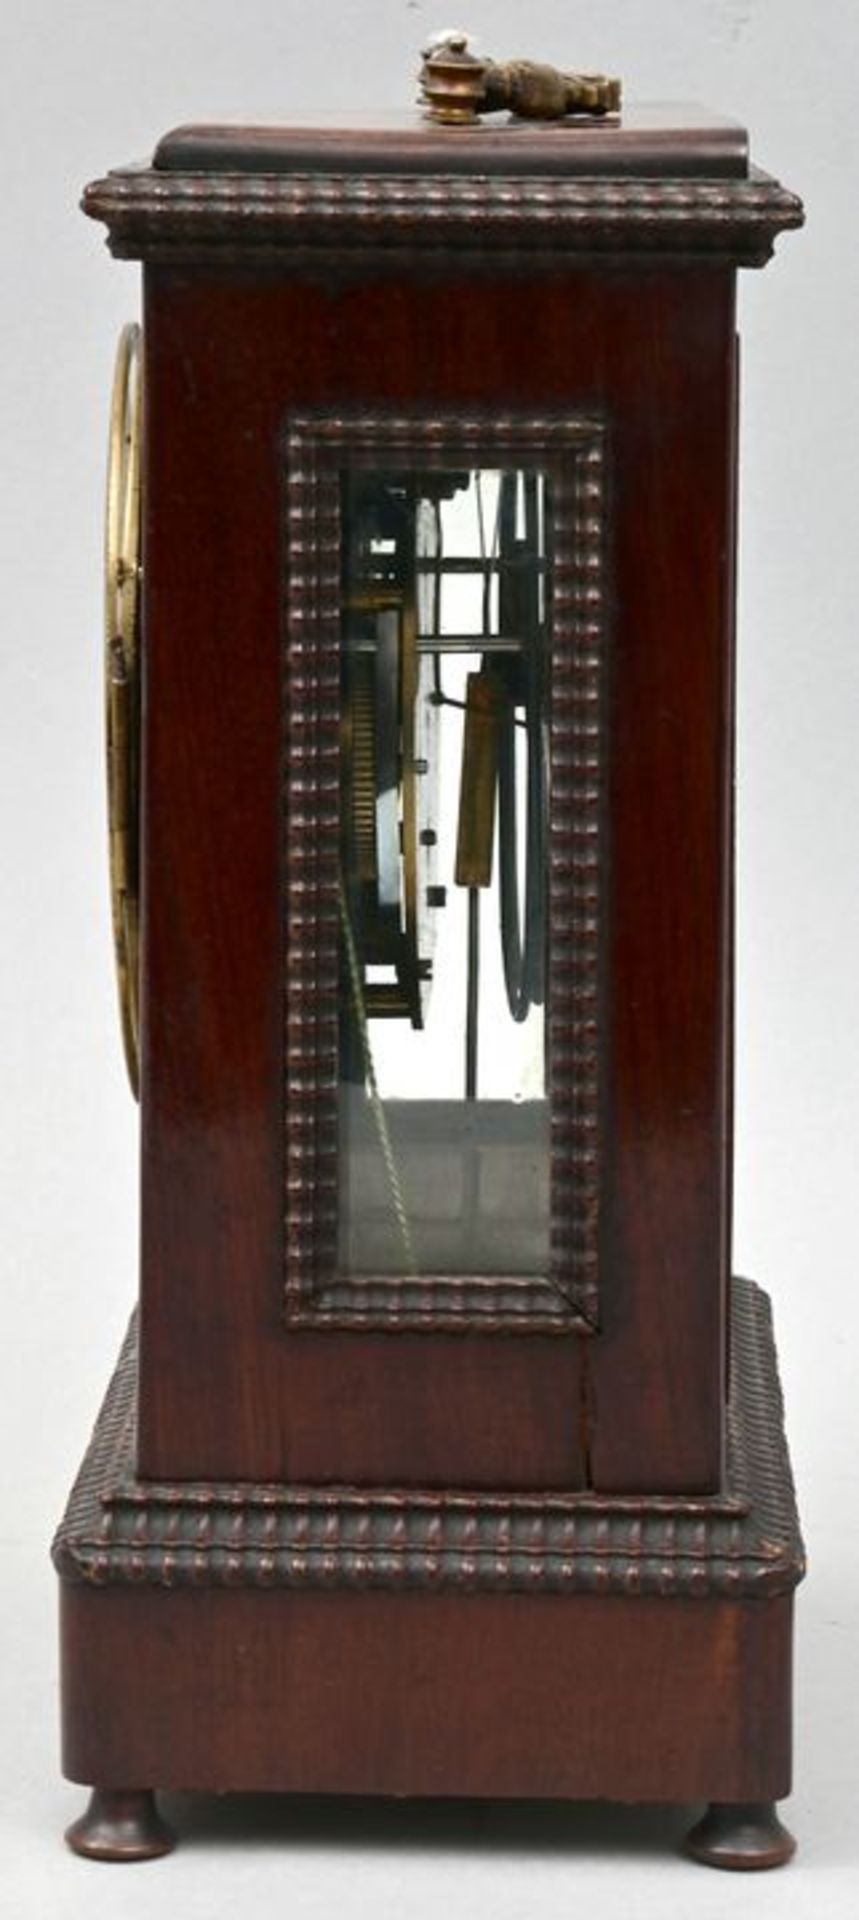 Tischuhr / Table clock - Image 2 of 7